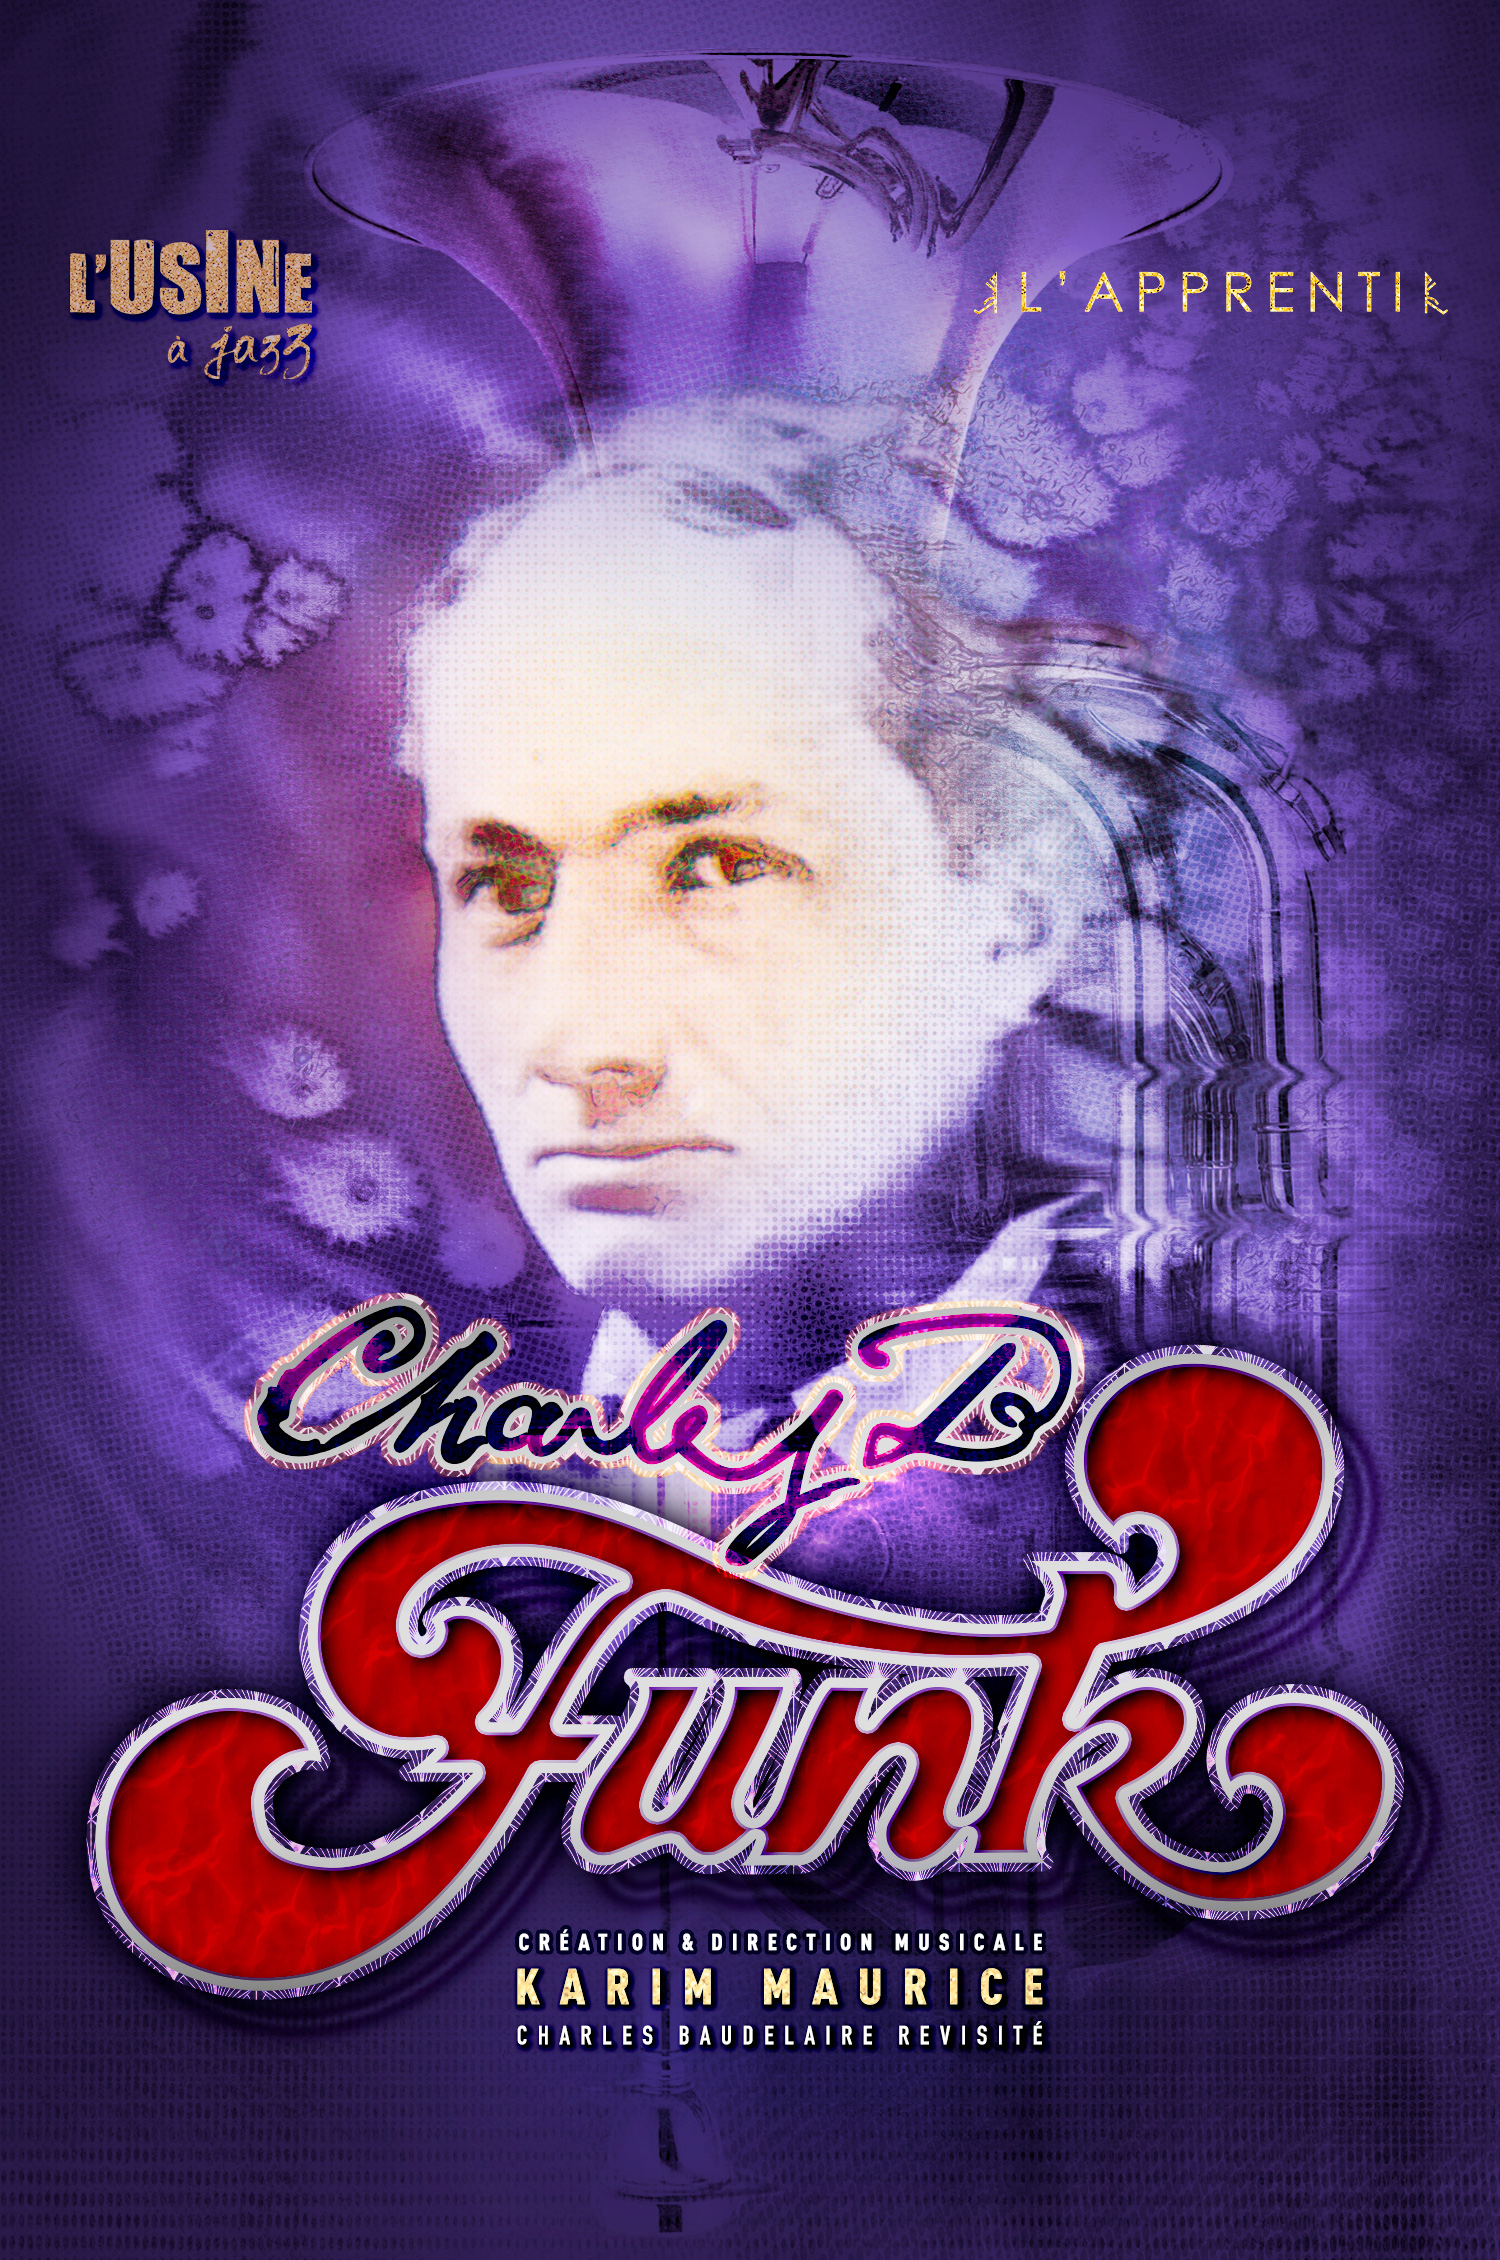 Charles B Funk